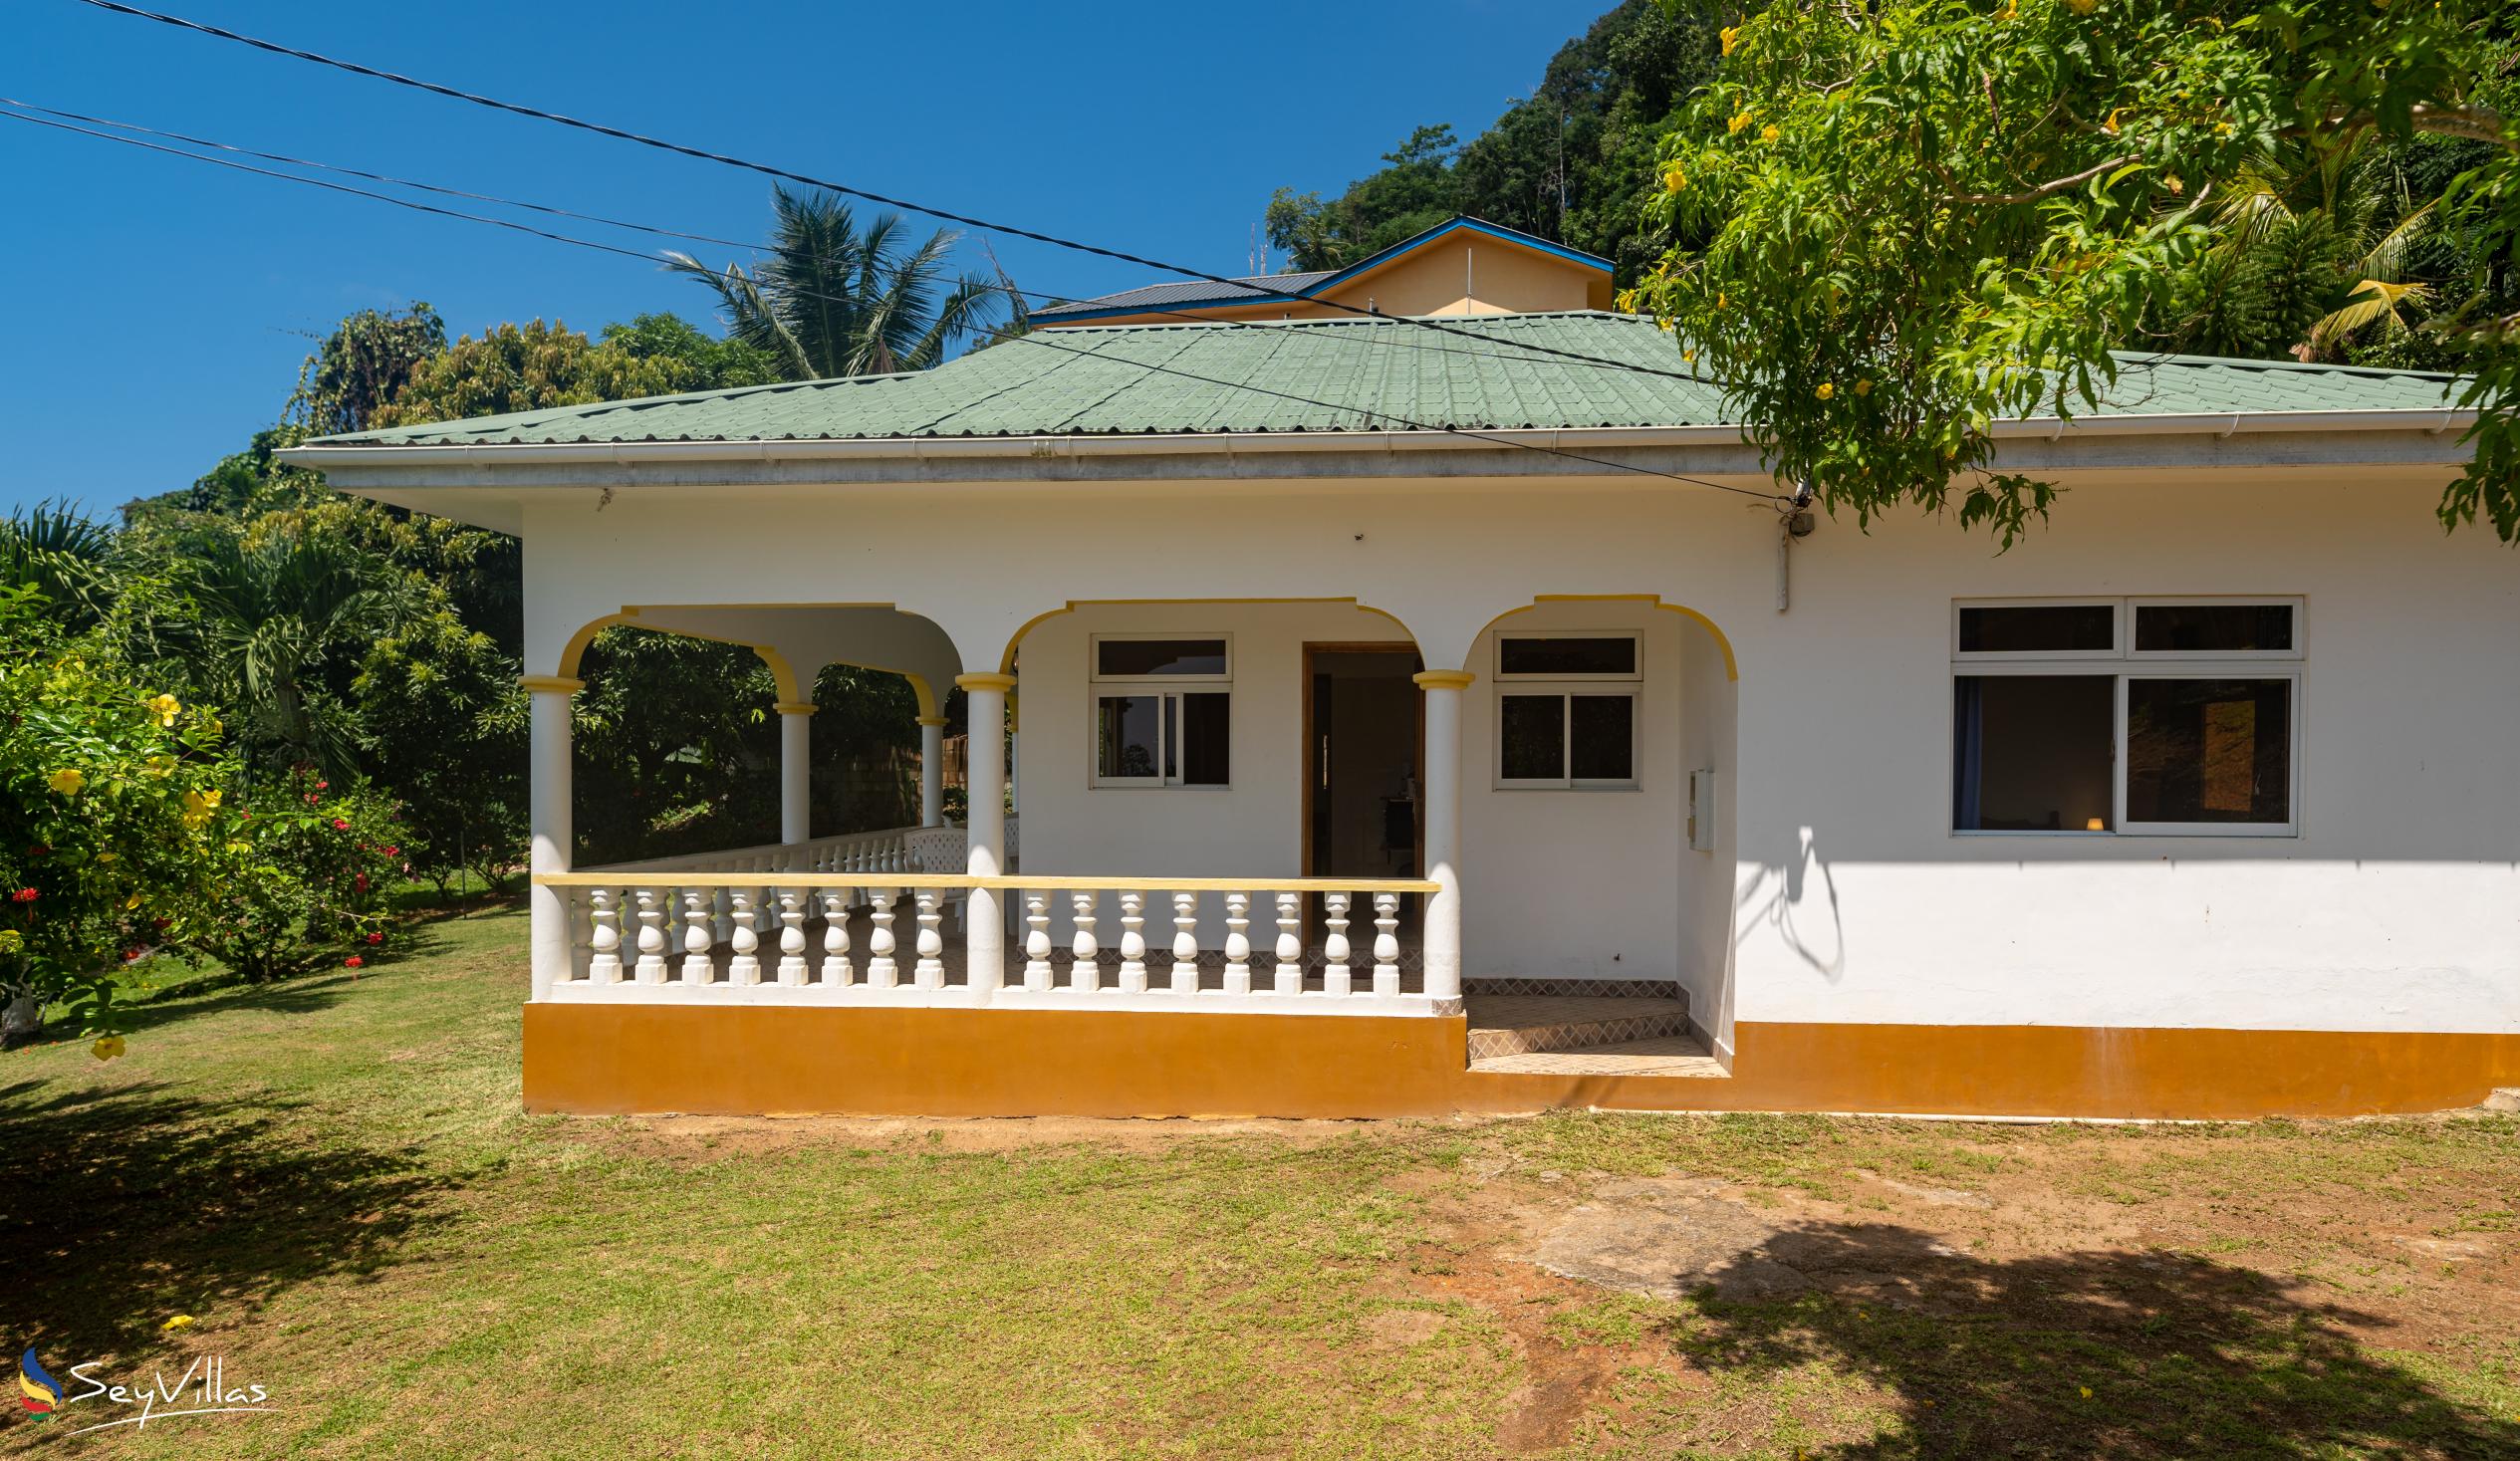 Foto 70: Maison Marikel - Villa 2 chambres - Mahé (Seychelles)